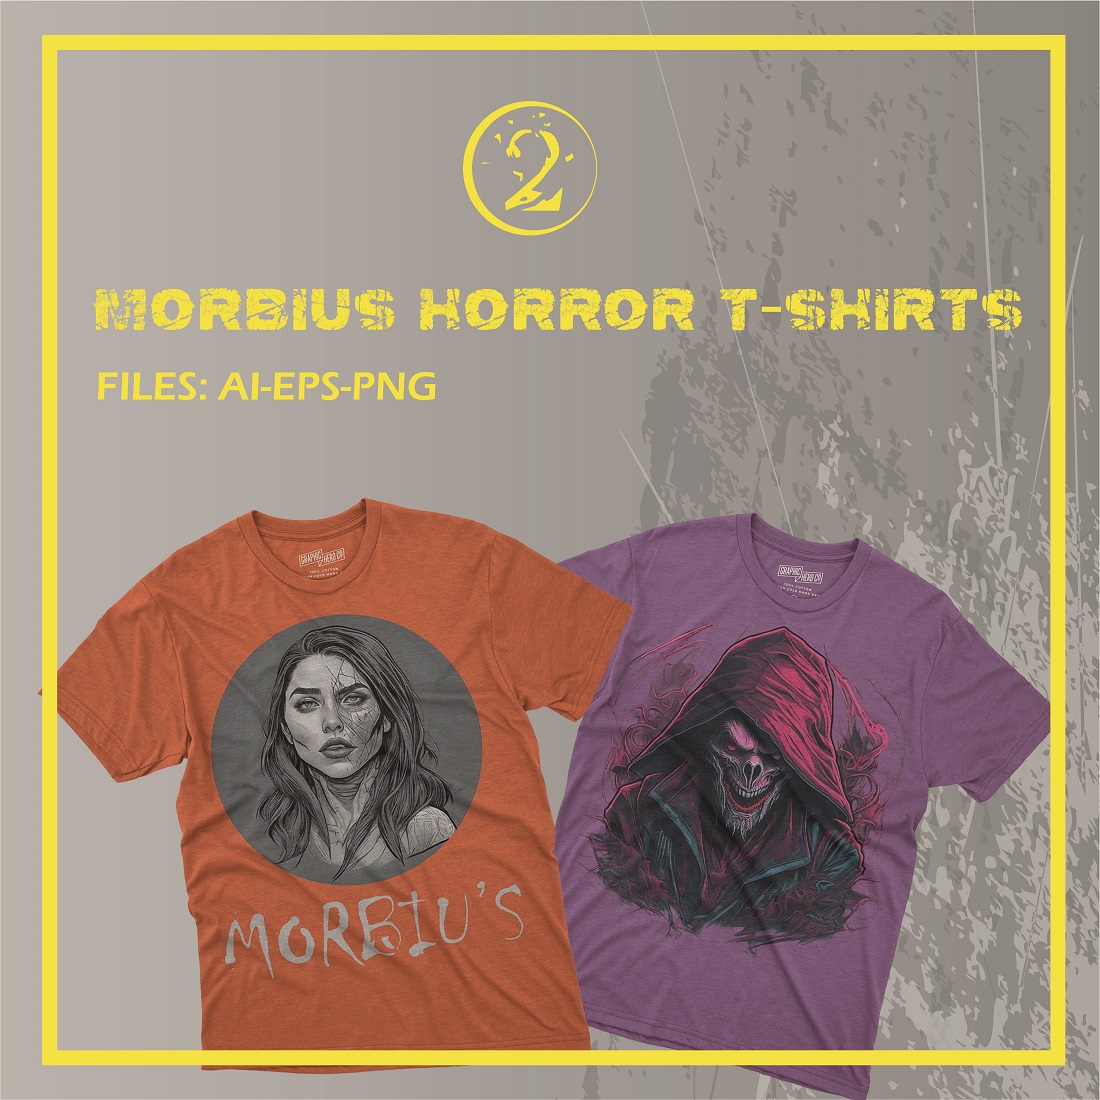 2 horror t-shirt designs morbius cover image.